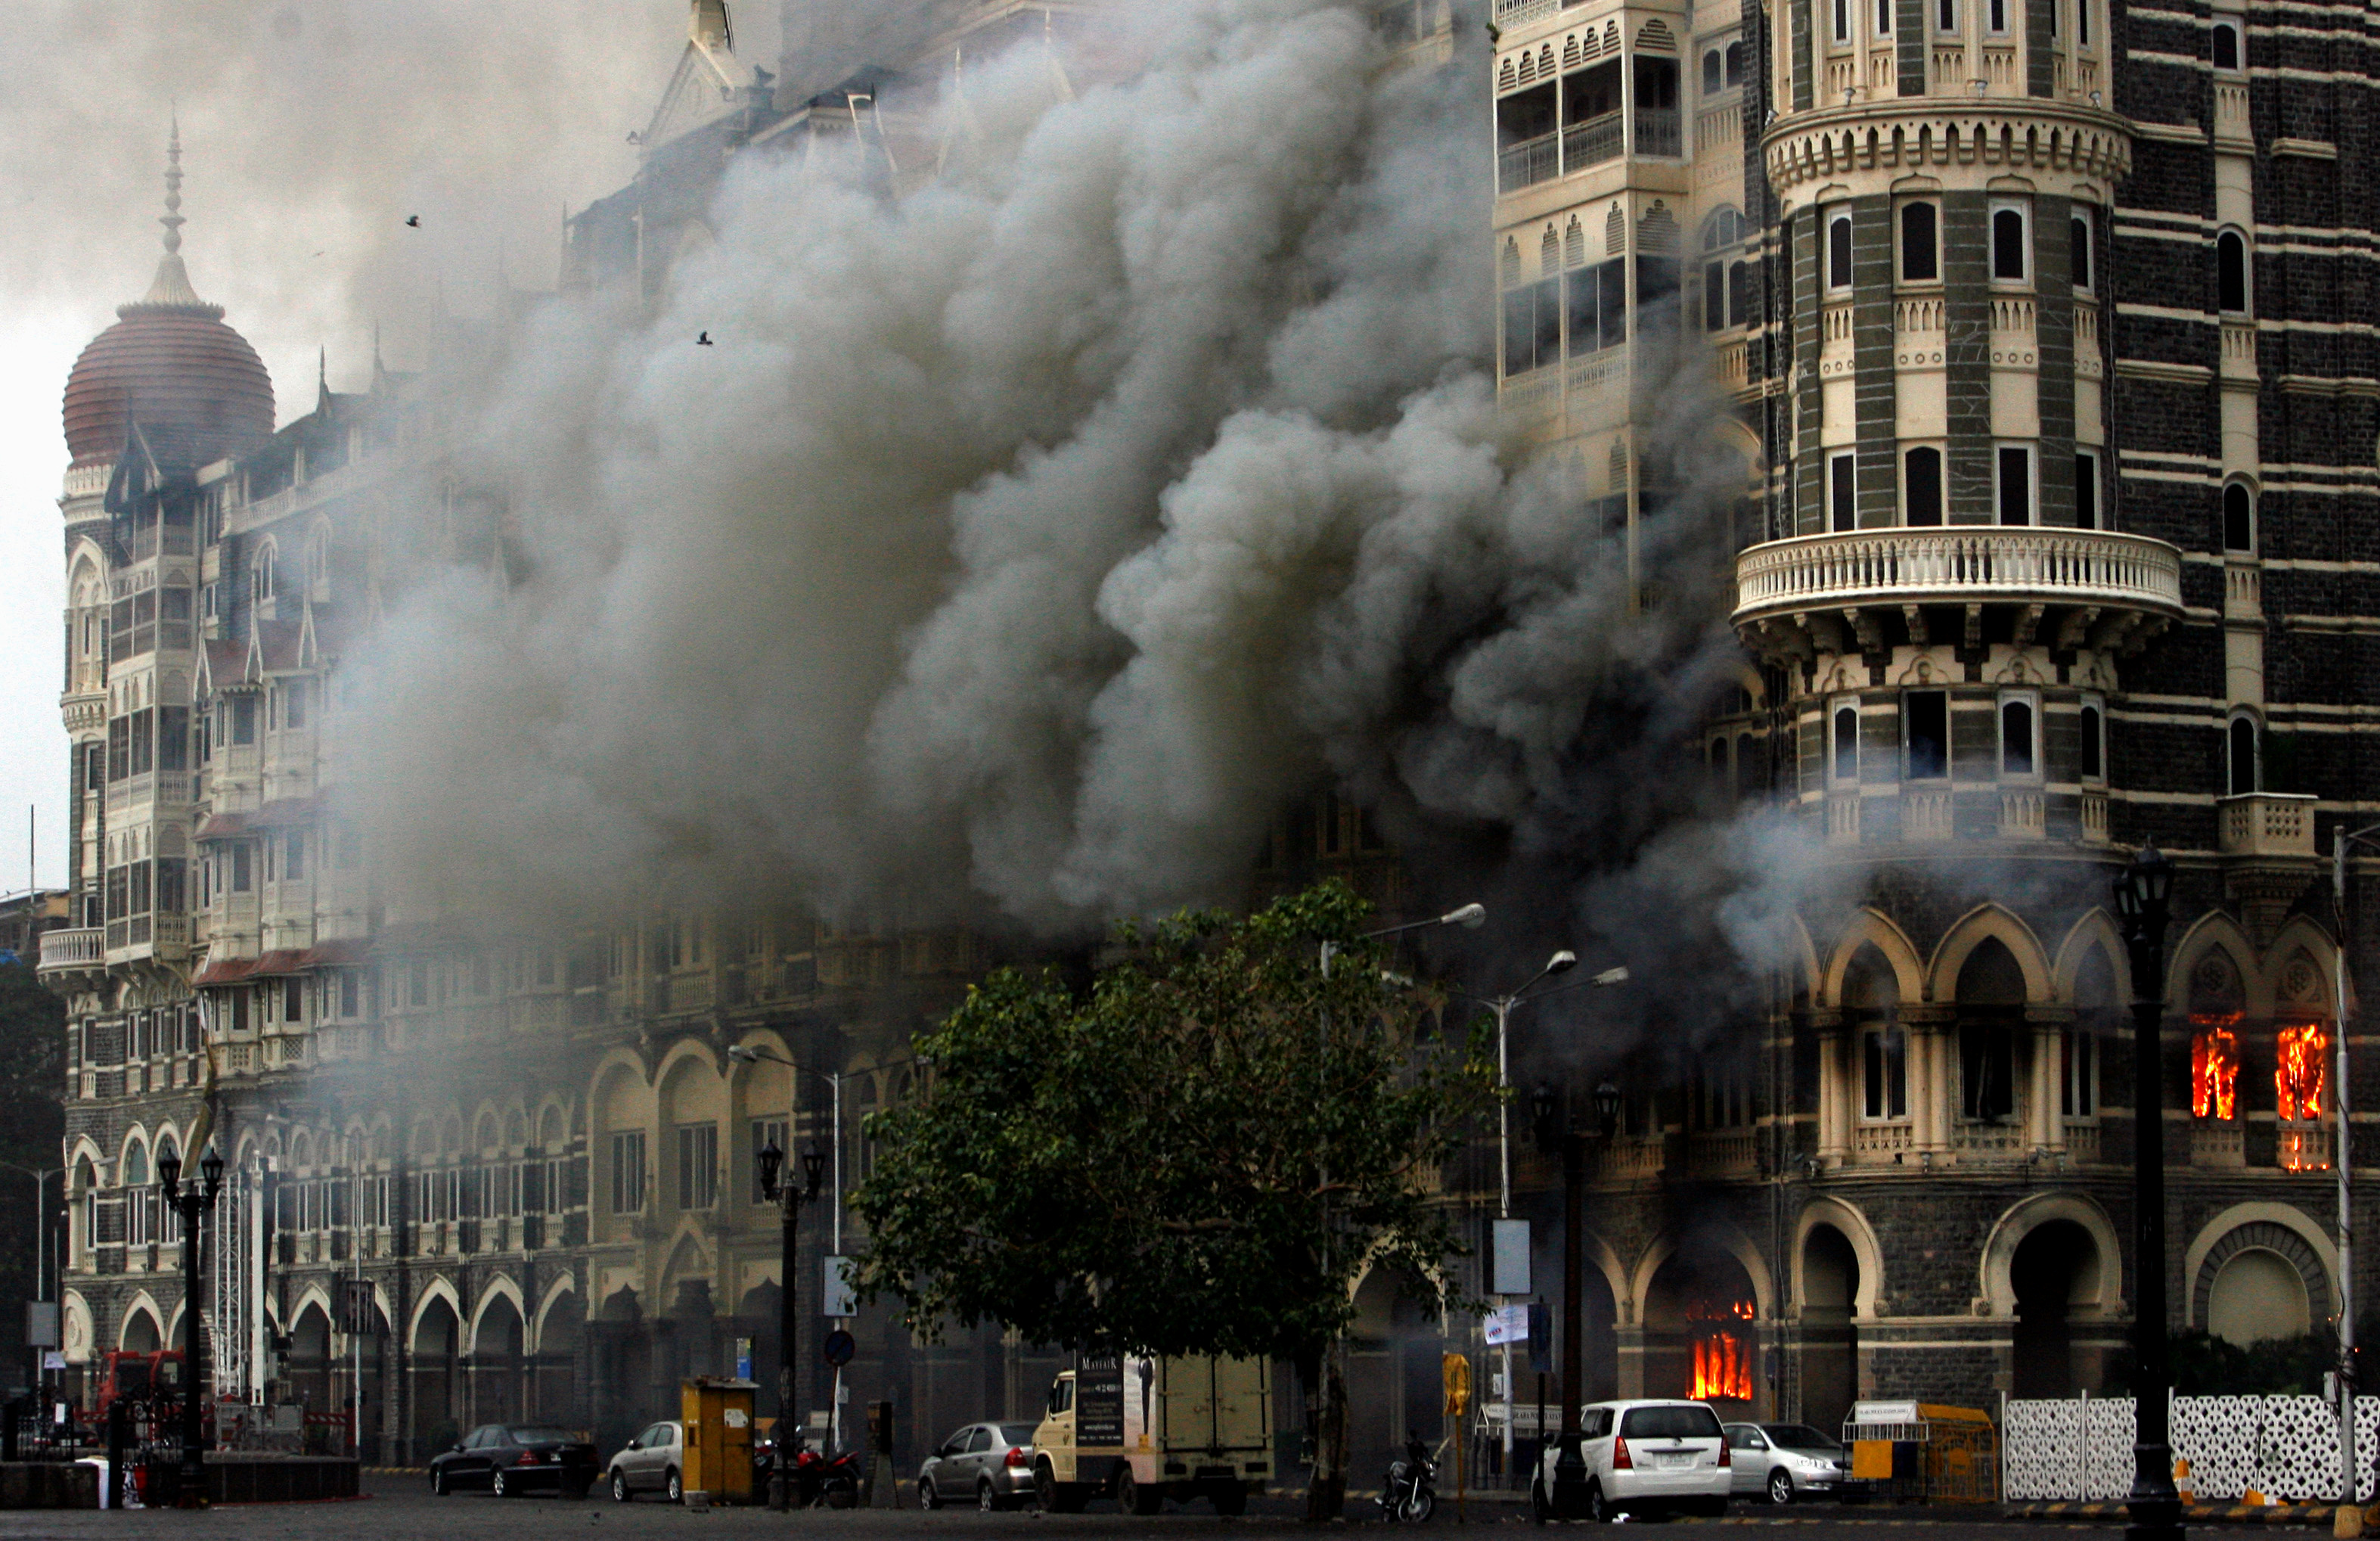 Нападение на отели. Мумбаи 2008 Тадж Махал теракт. Теракт в Индии 2008 Тадж Махал. Индия 2008 теракт отель Мумбаи.